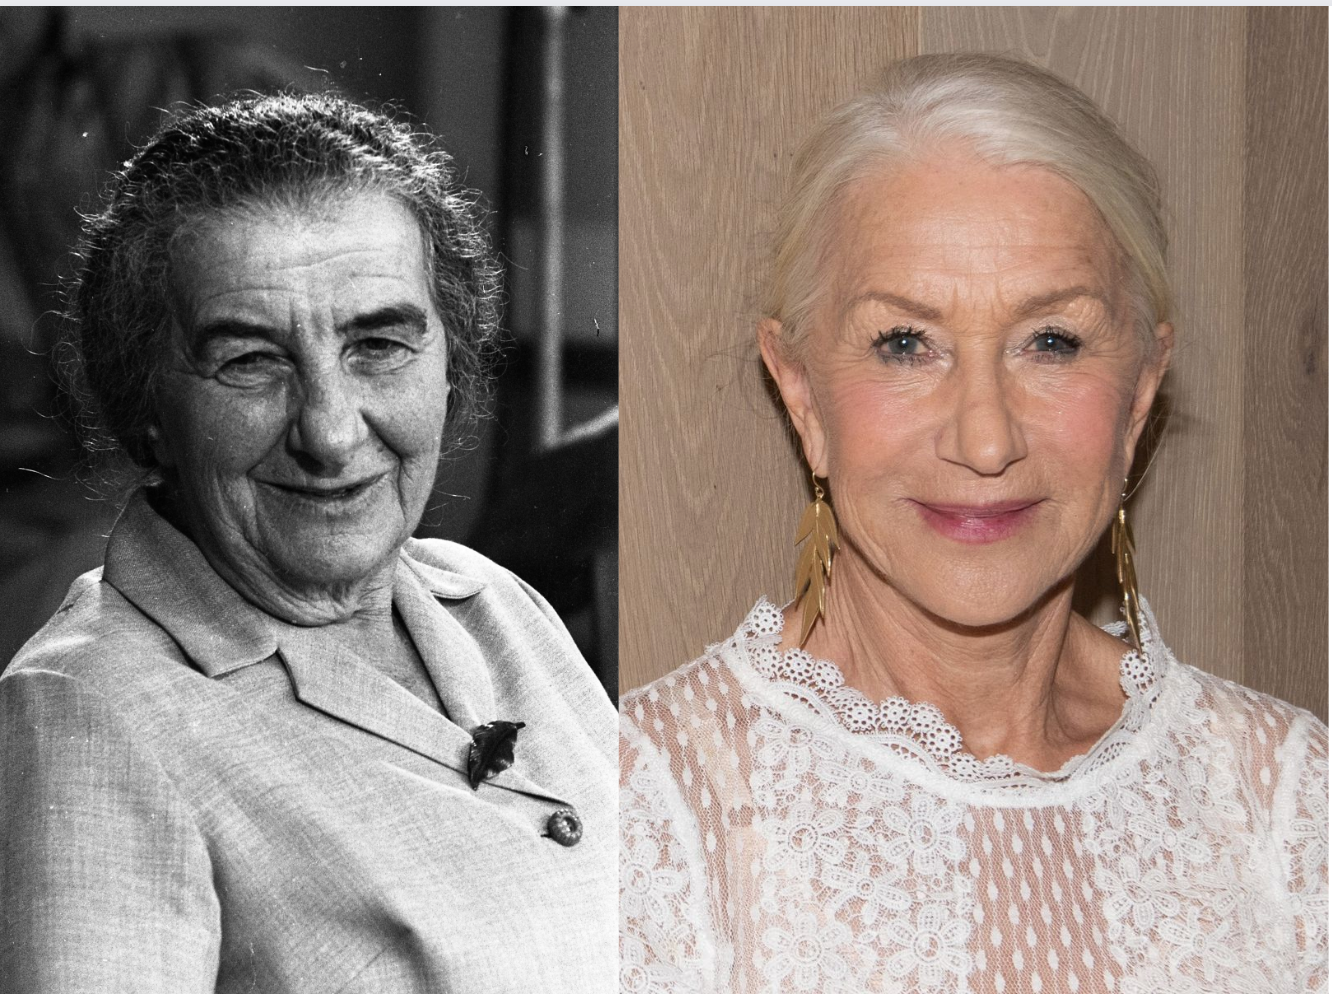 Golda' director defends casting Helen Mirren: 'She's got the